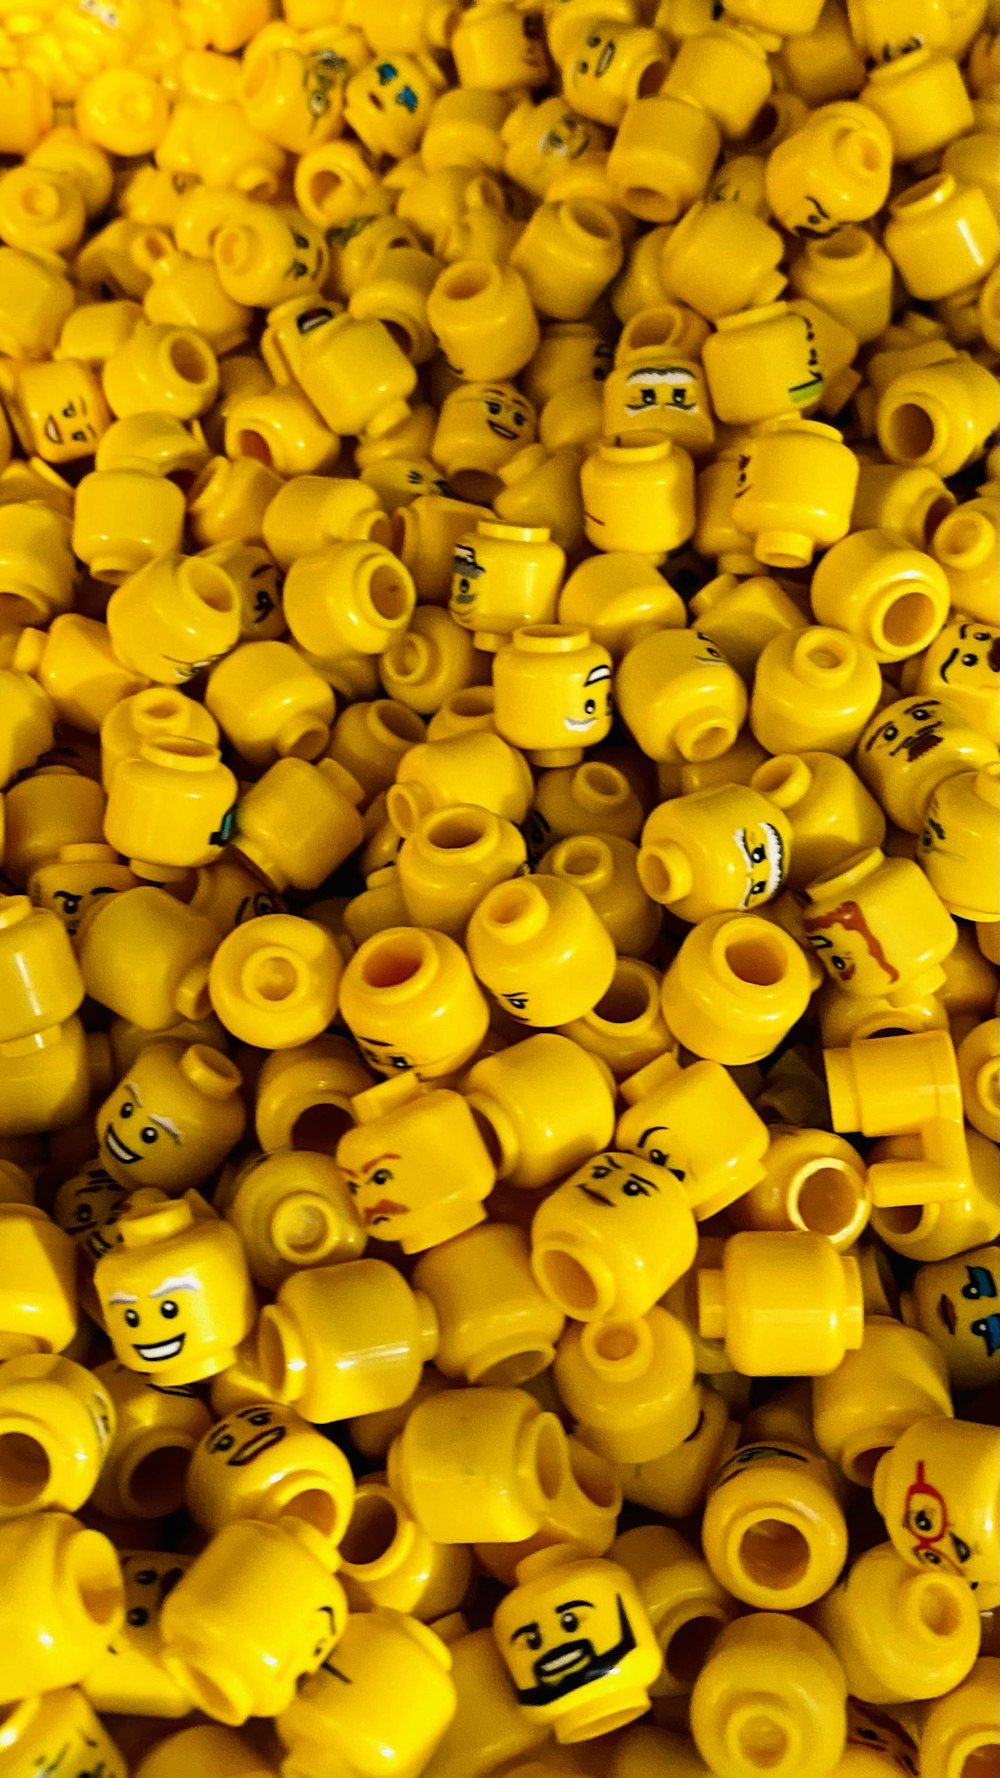 Un grupo de patos de goma amarillos